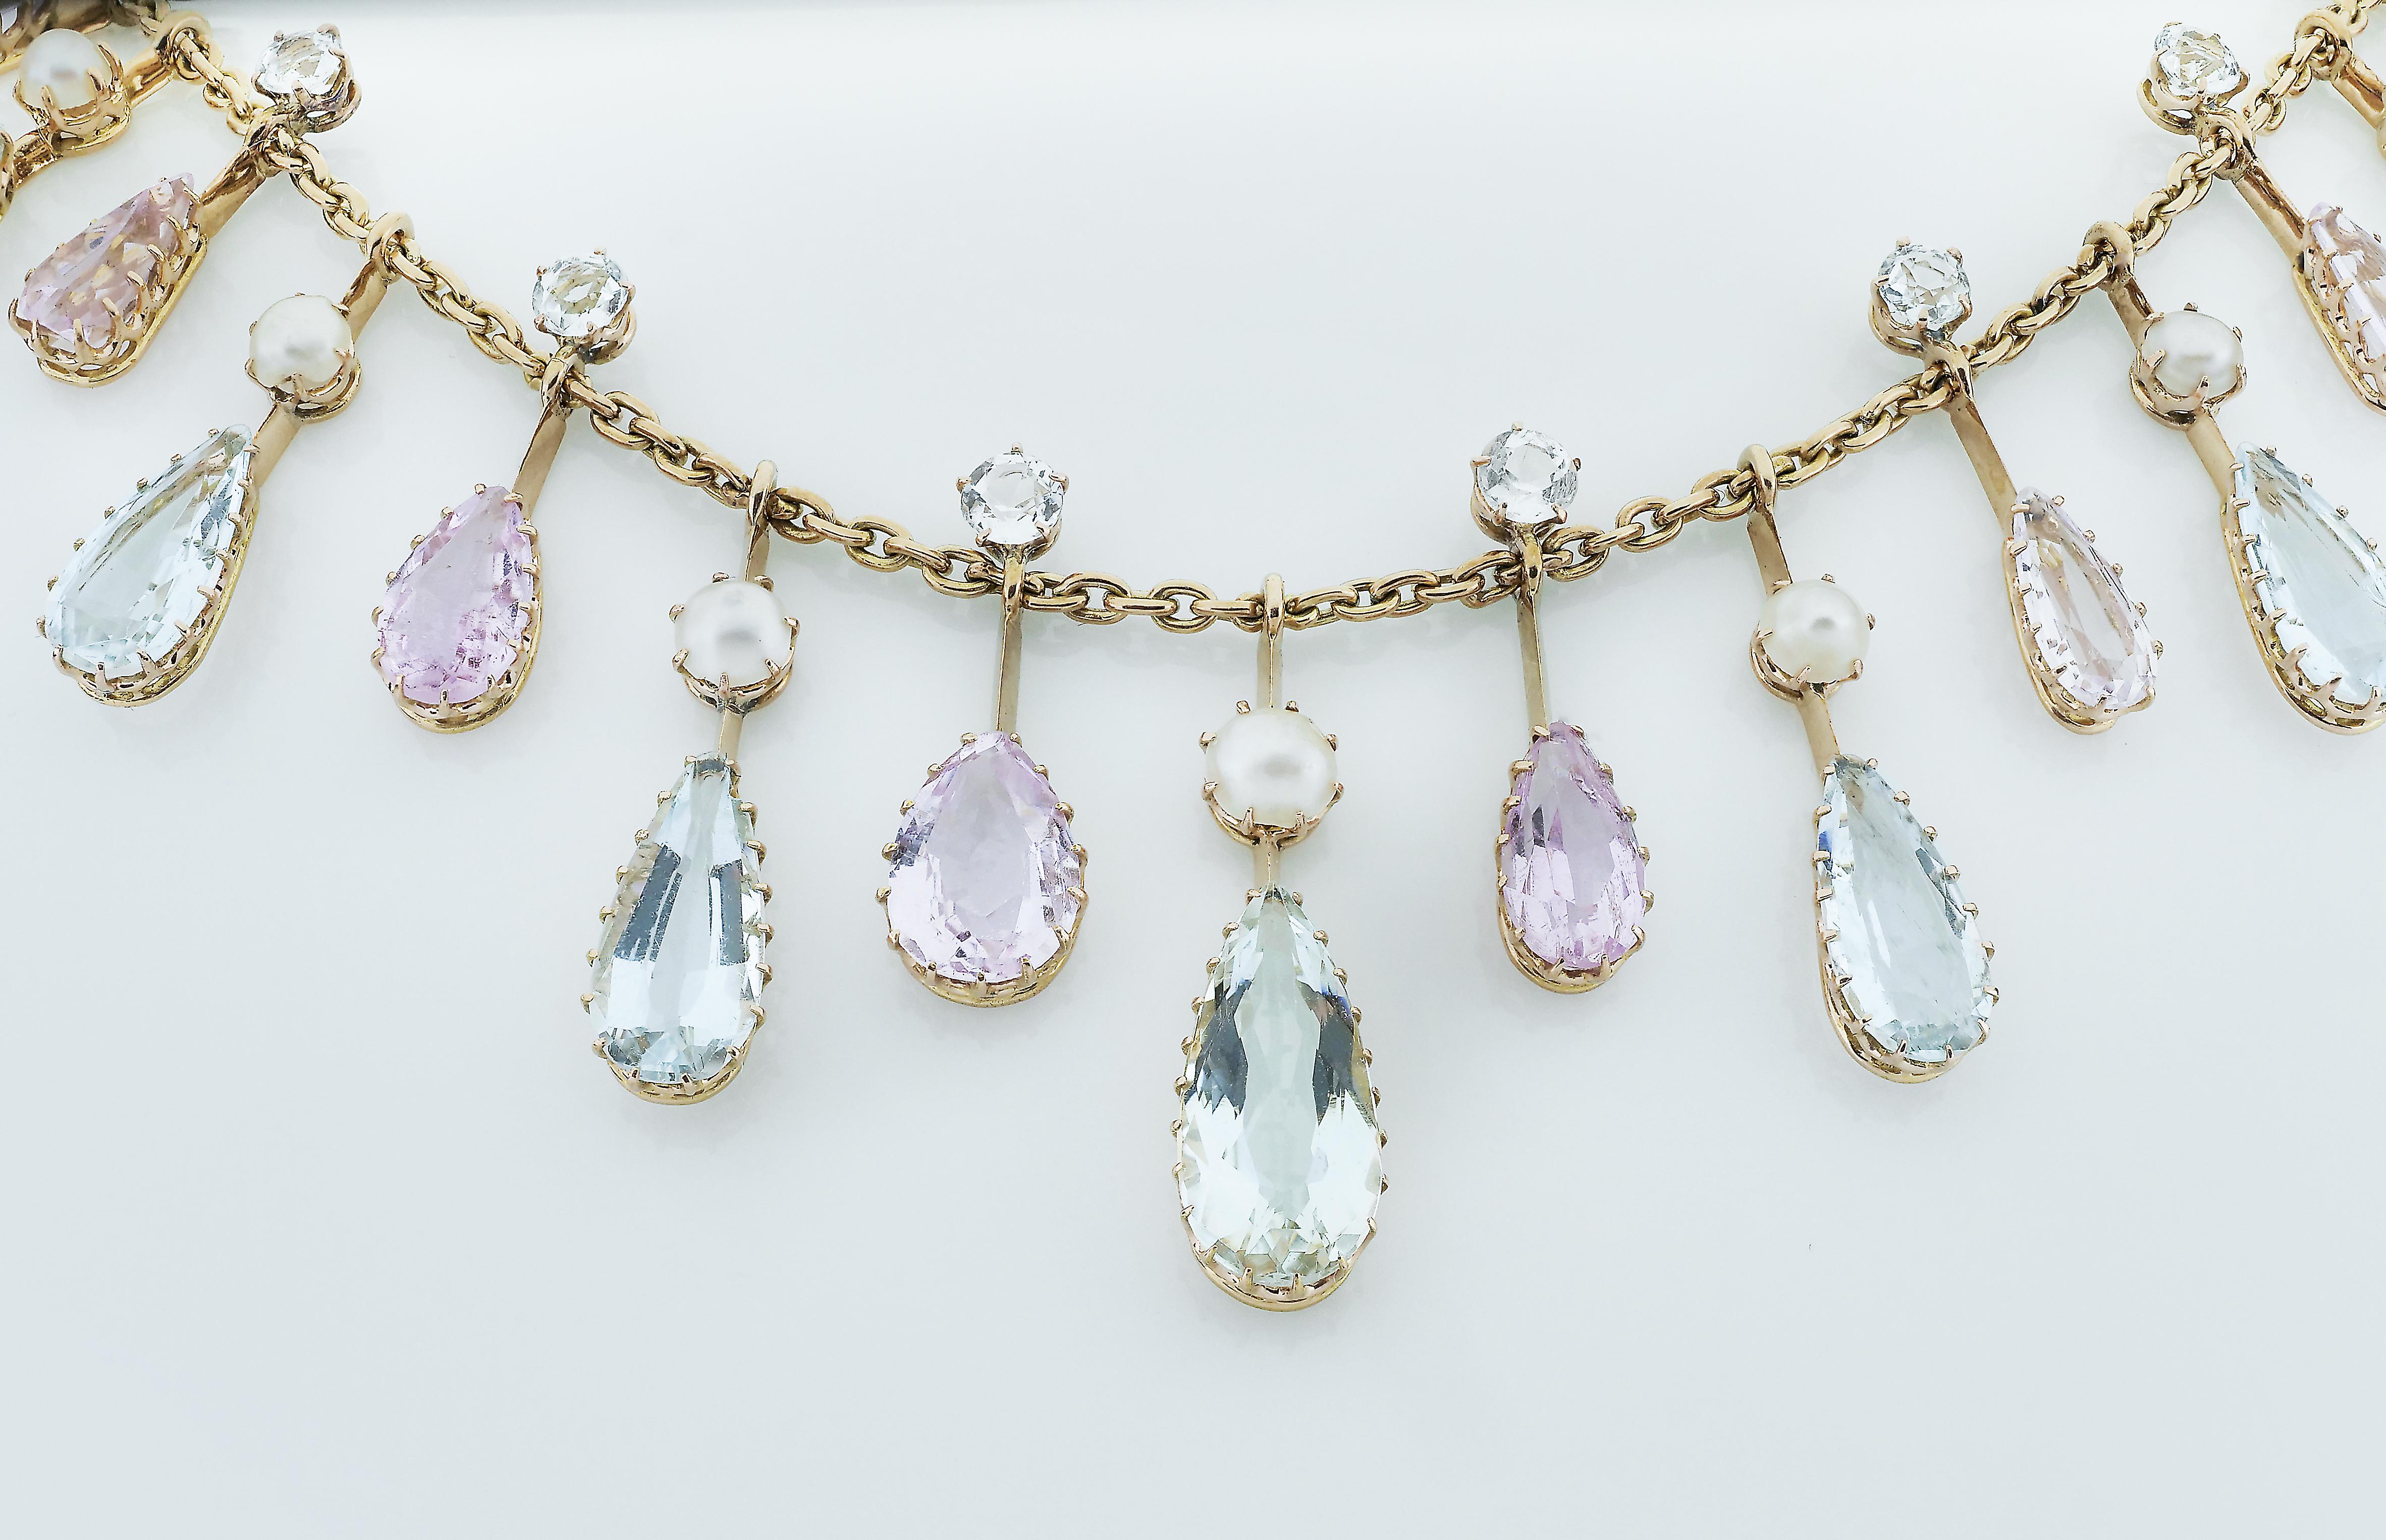 Women's Antique Edwardian Natural Pearls, Aquamarine, Topaz Fringe Necklace or Headpiece